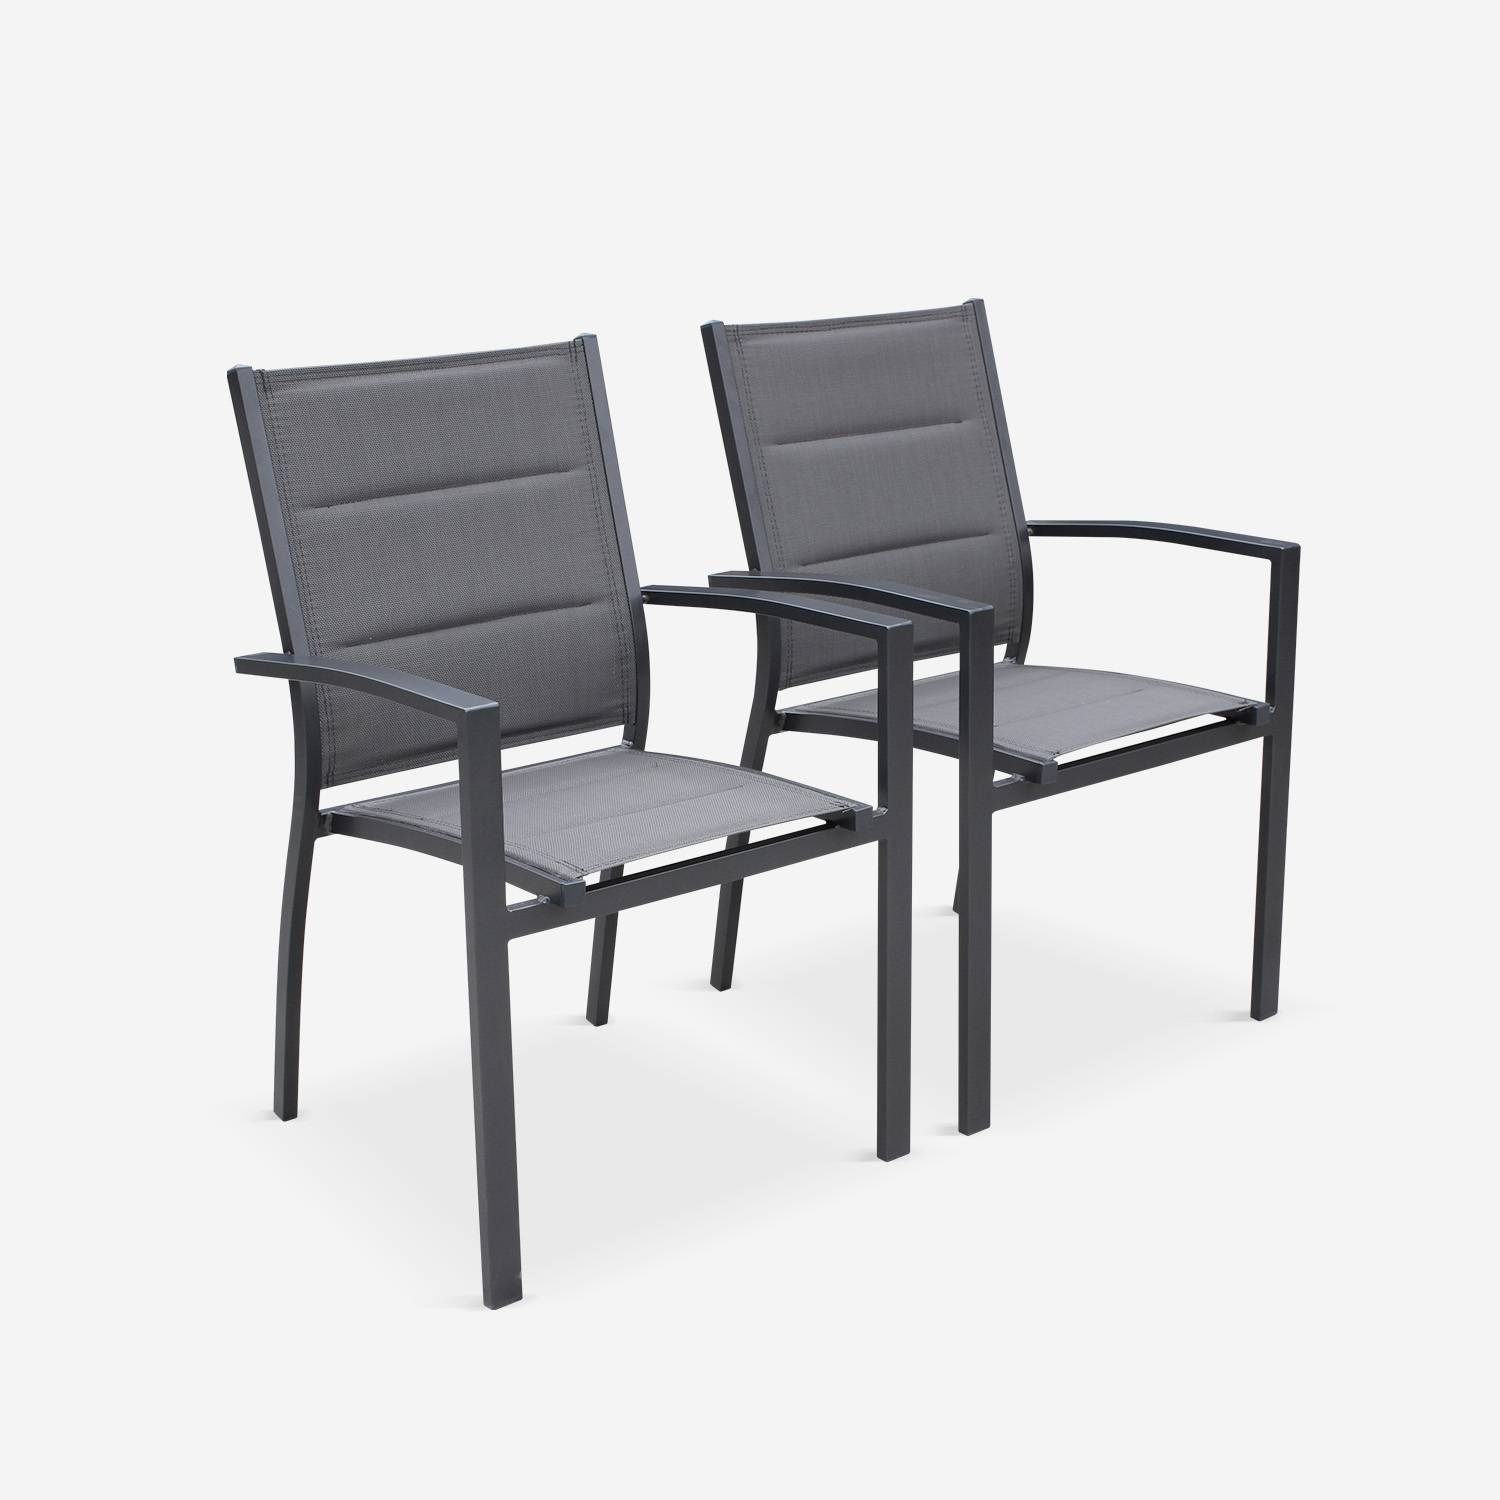 Conjunto de 2 cadeiras - Chicago / Odenton / Philadelphia Antracite - alumínio antracite e textileno cinzento escuro, empilháveis Photo1